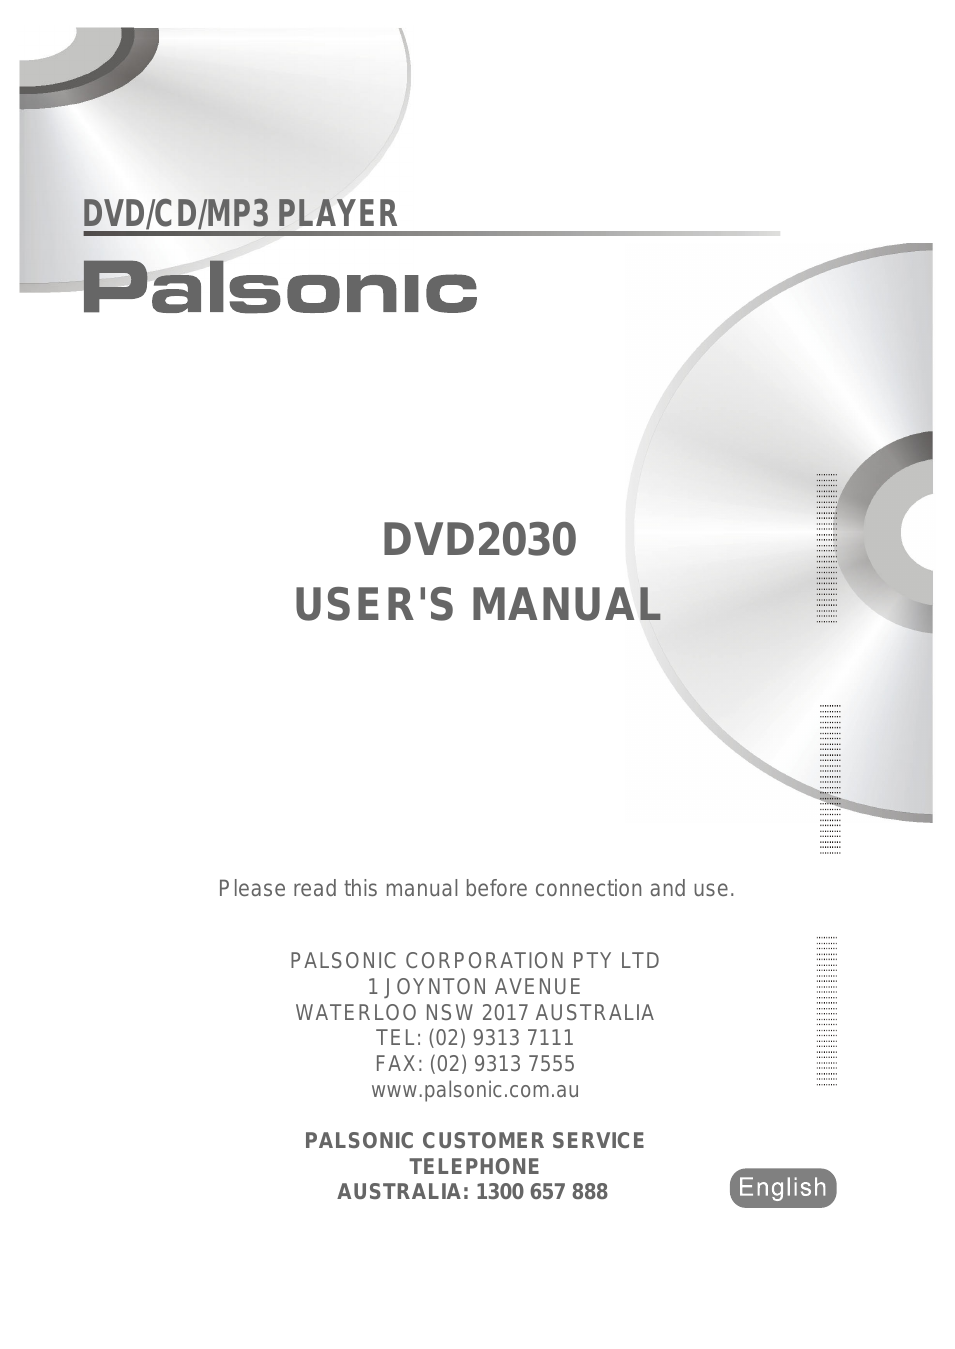 DVD/CD/MP3 Player DVD2030